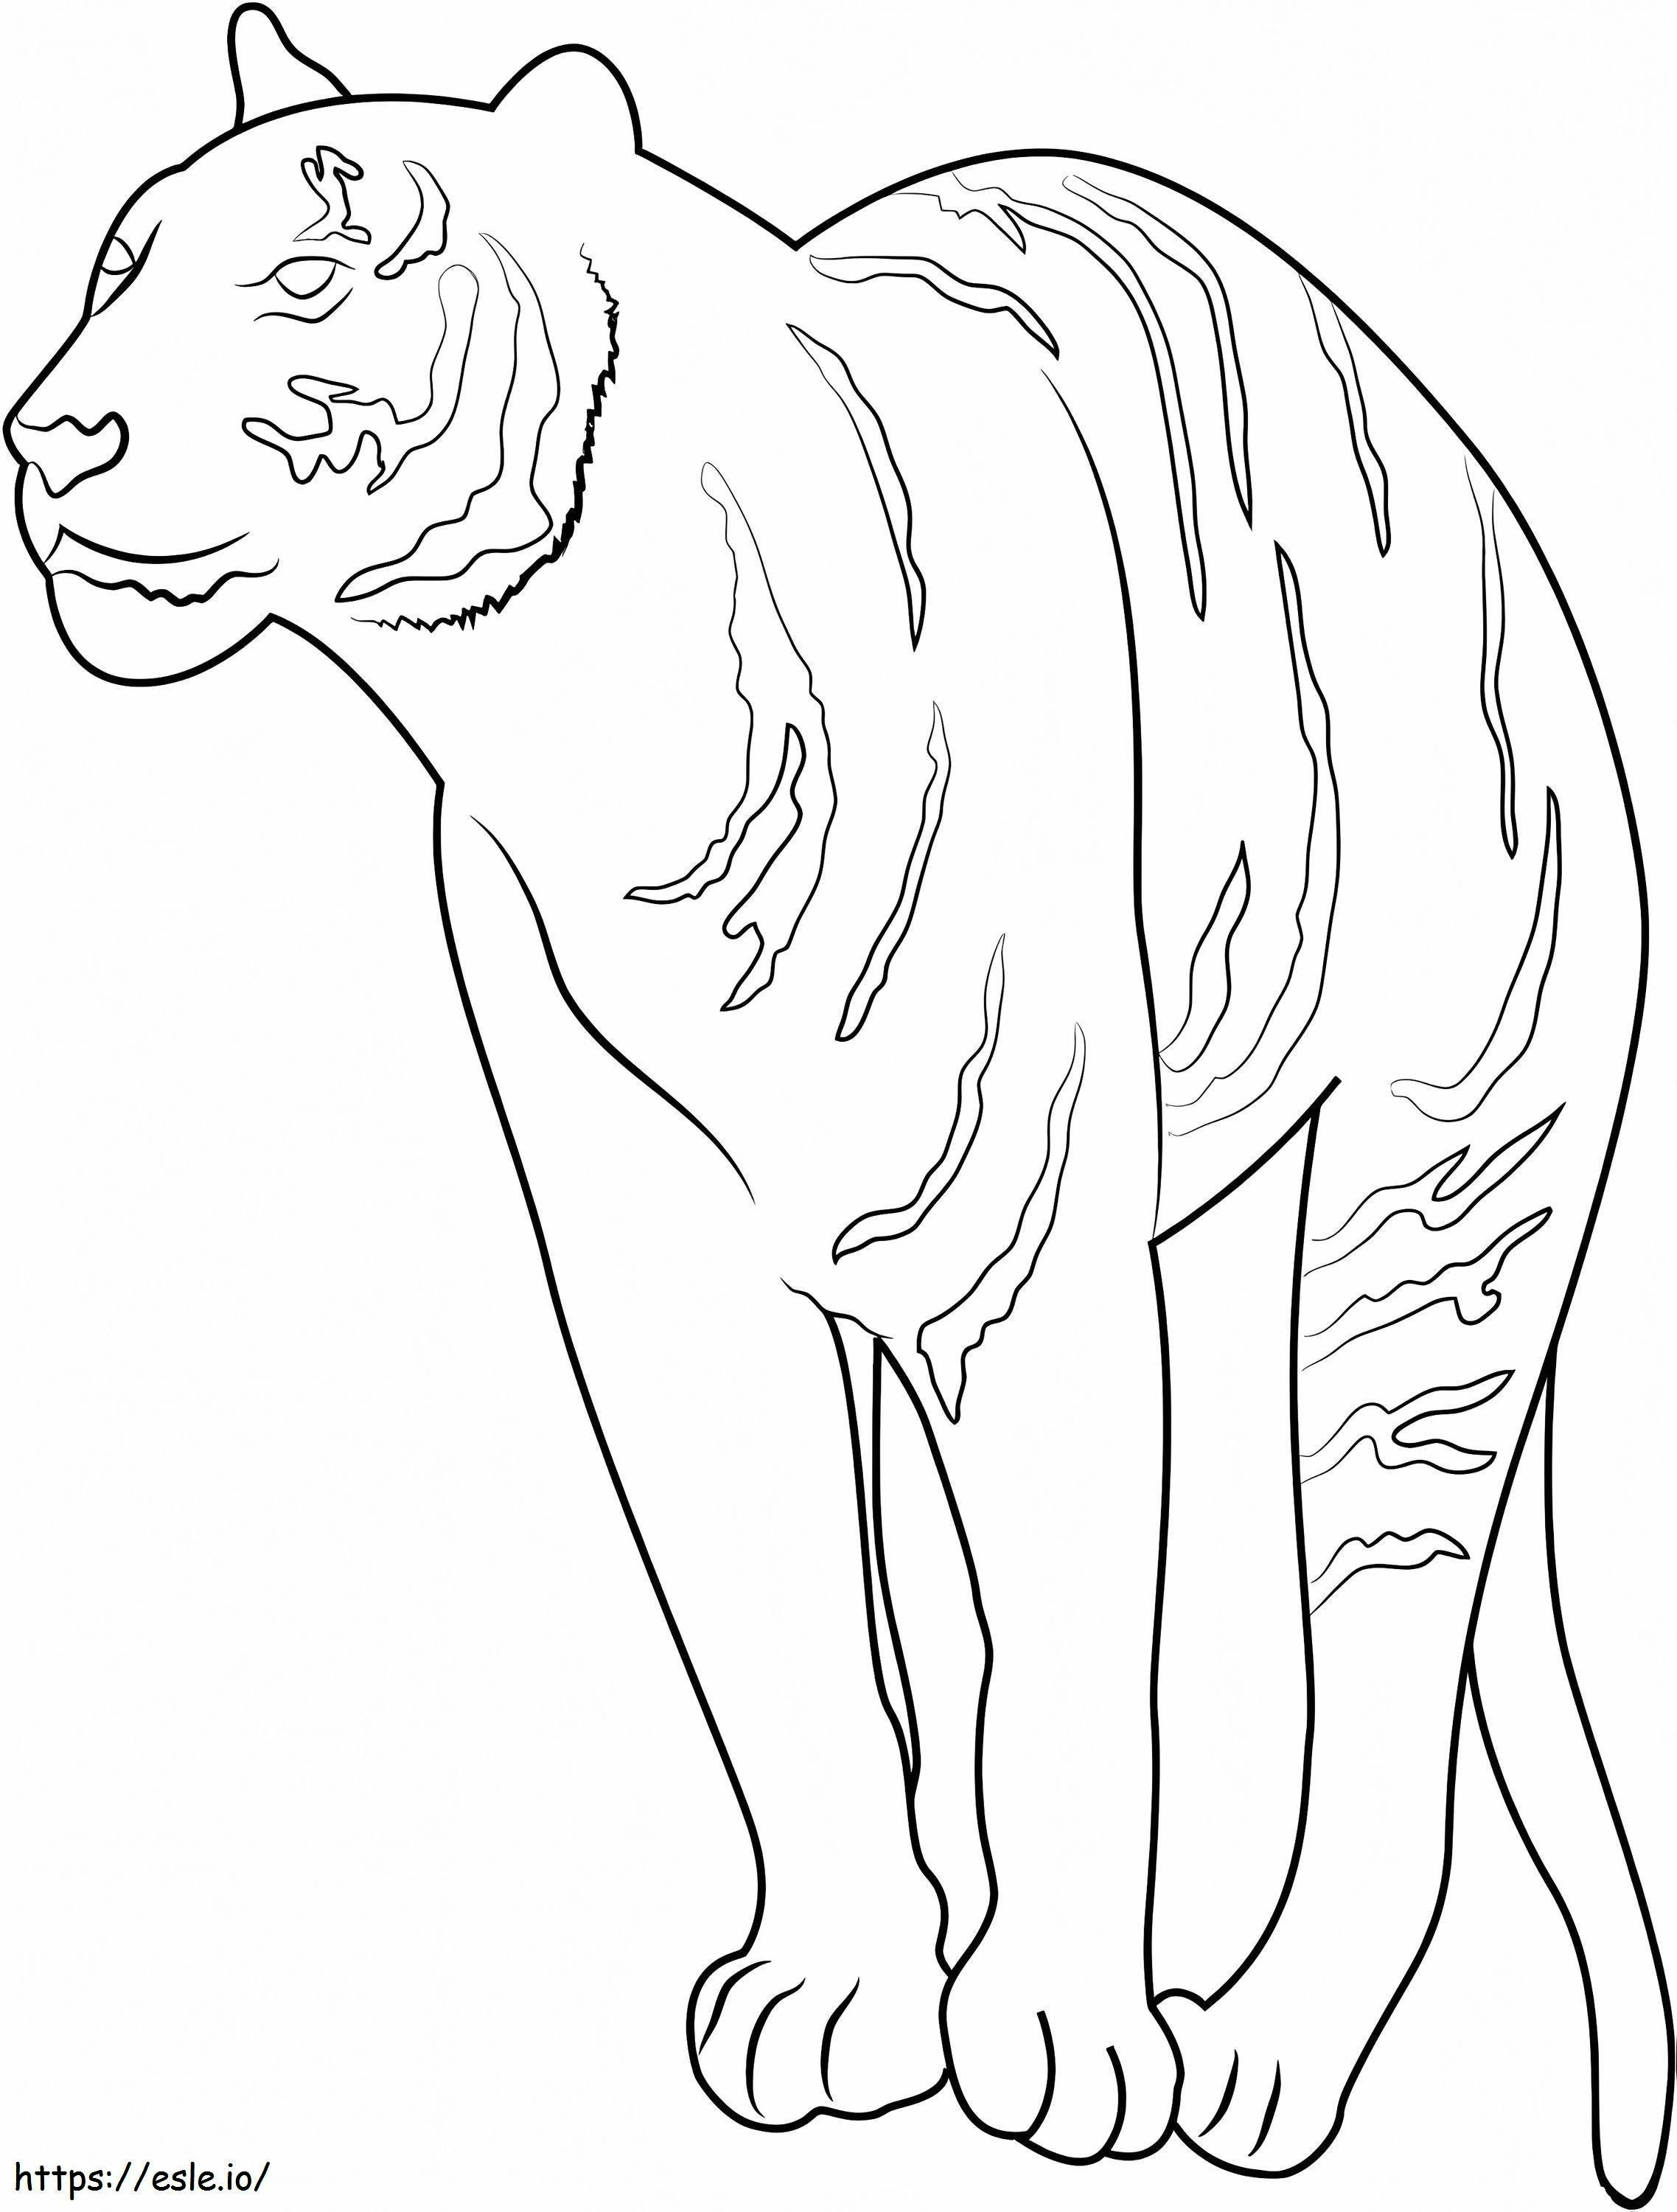 Tigre em pé para colorir